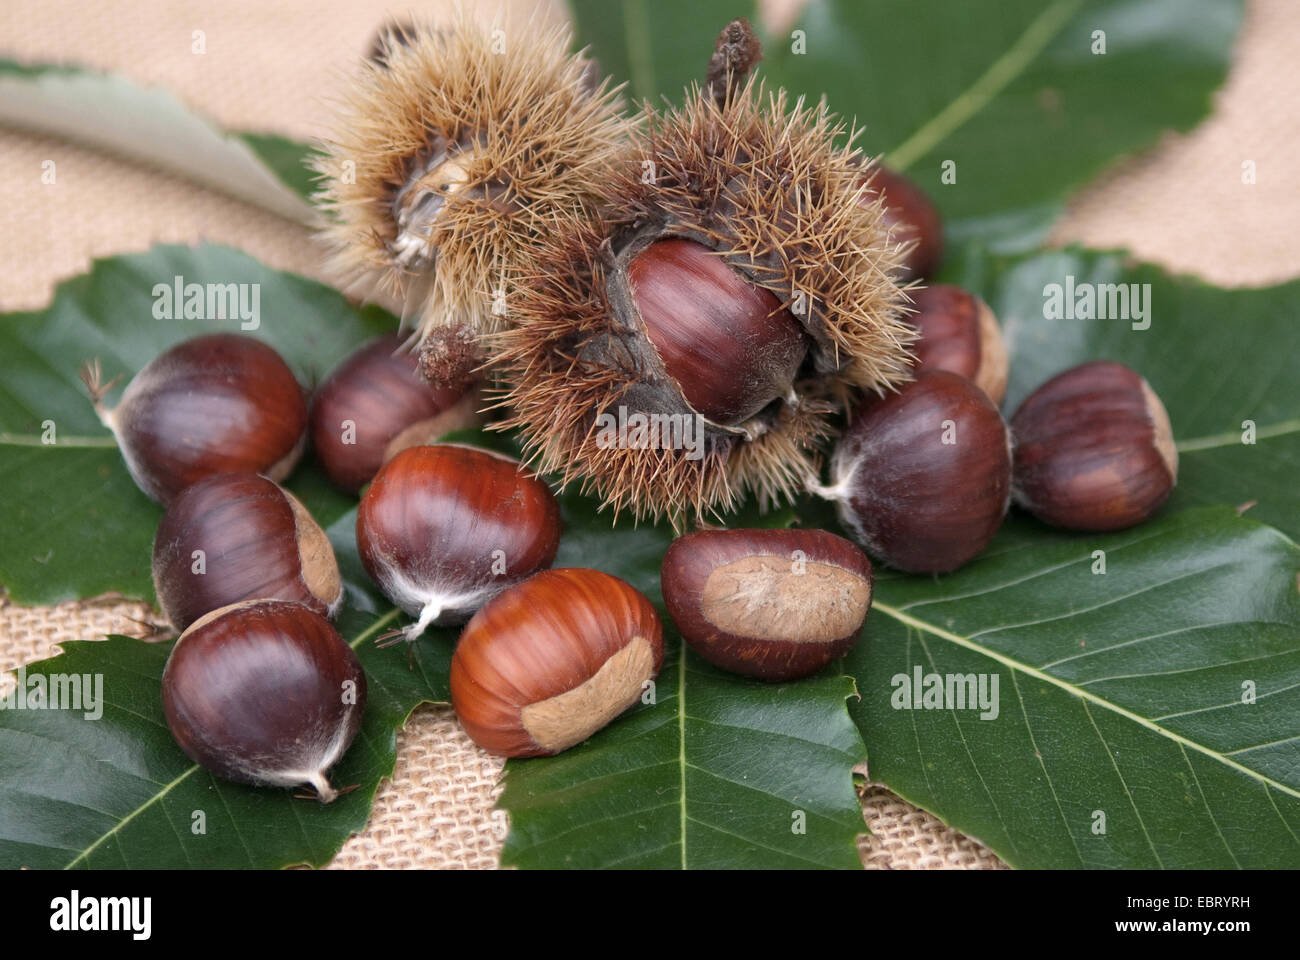 Spanish chestnut, sweet chestnut (Castanea sativa 'Ecker 1', Castanea sativa Ecker 1), cultivar Ecker 1, fruits with husk on a leaf Stock Photo